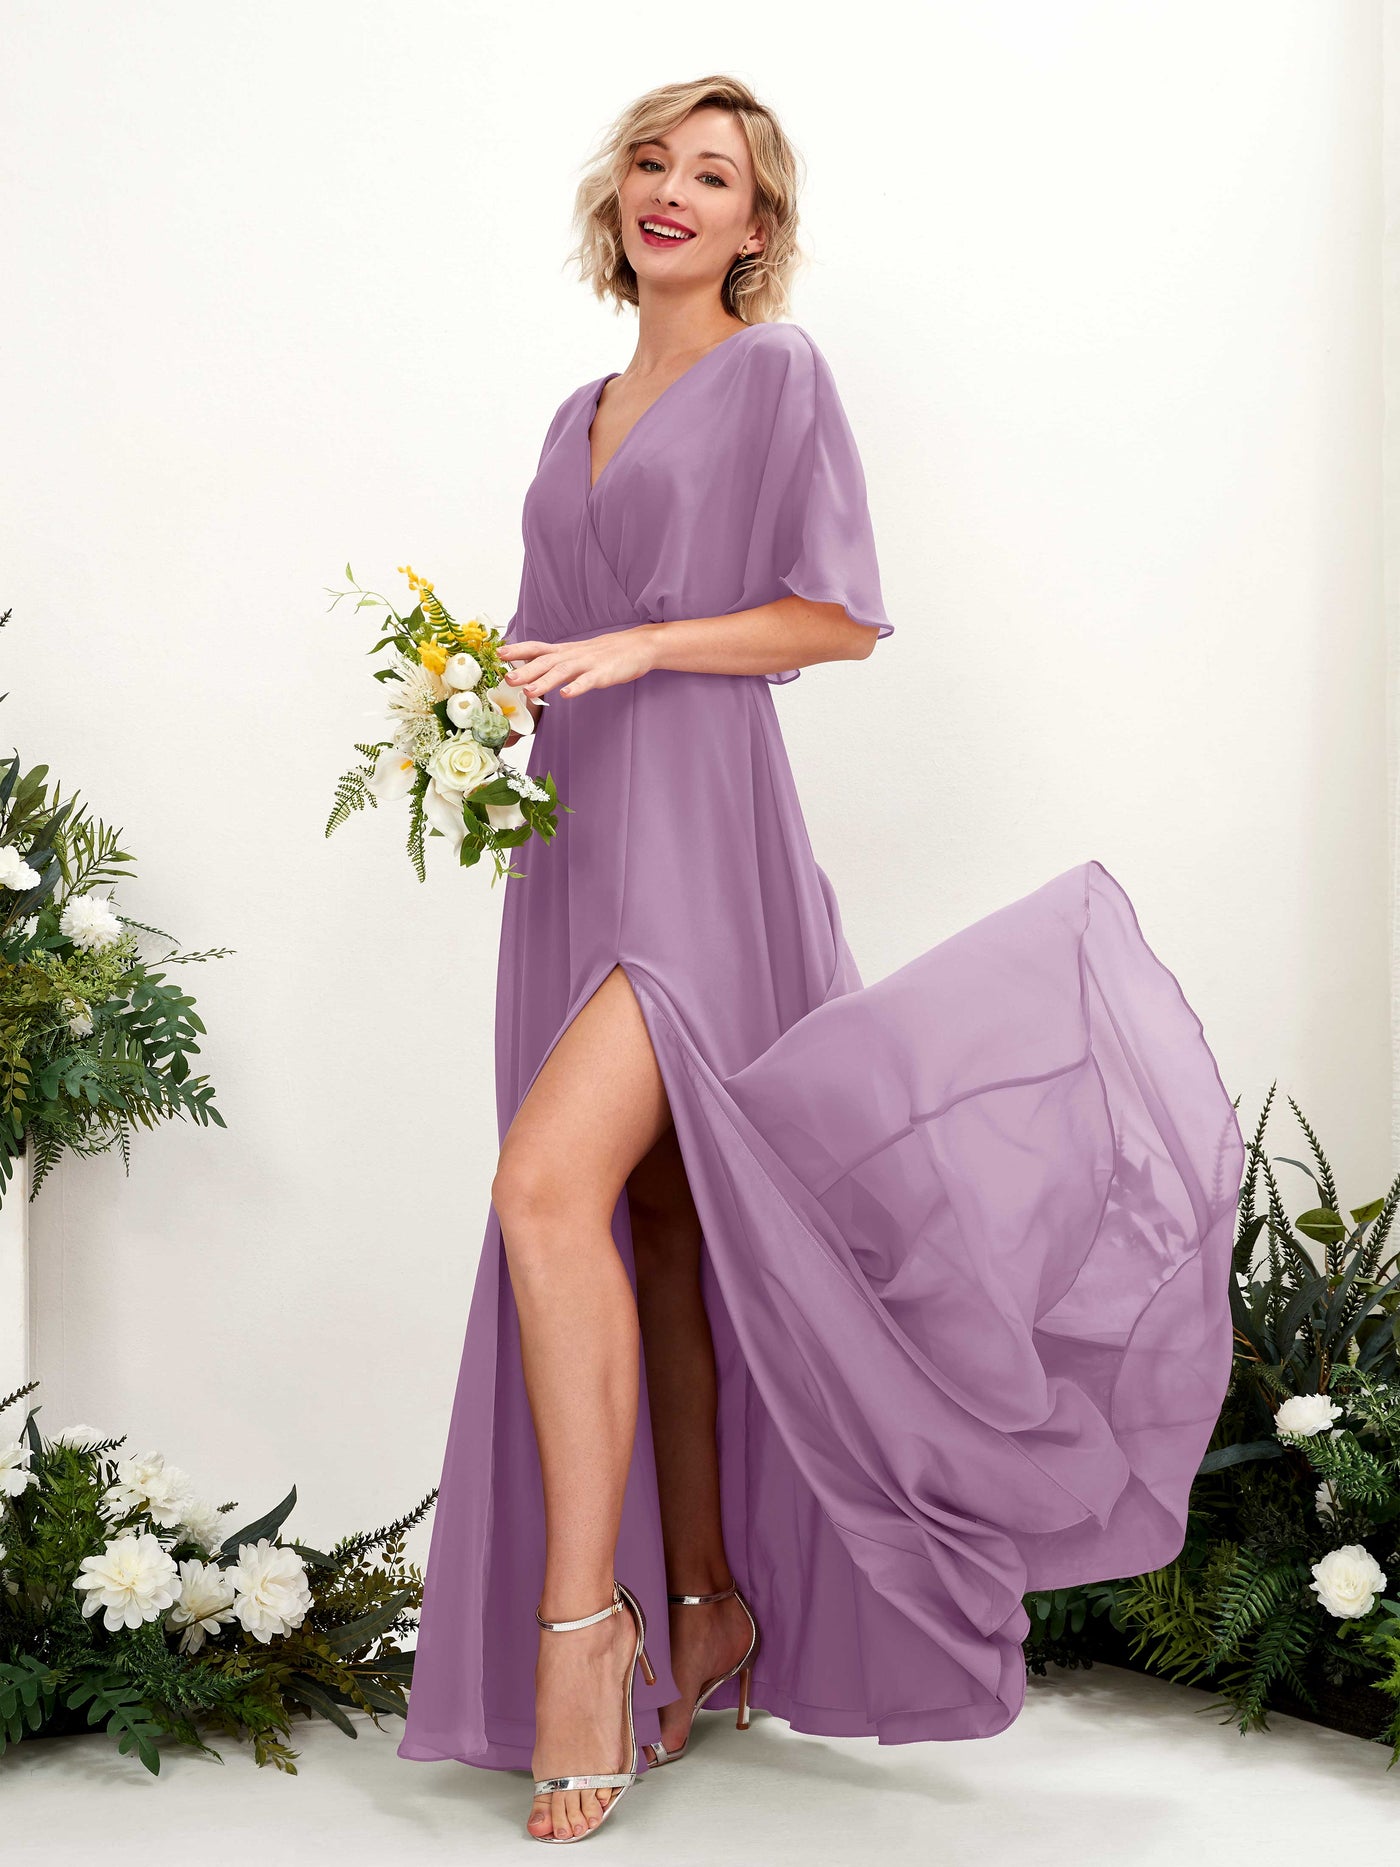 Orchid Mist Bridesmaid Dresses Bridesmaid Dress A-line Chiffon V-neck Full Length Short Sleeves Wedding Party Dress (81225121)#color_orchid-mist